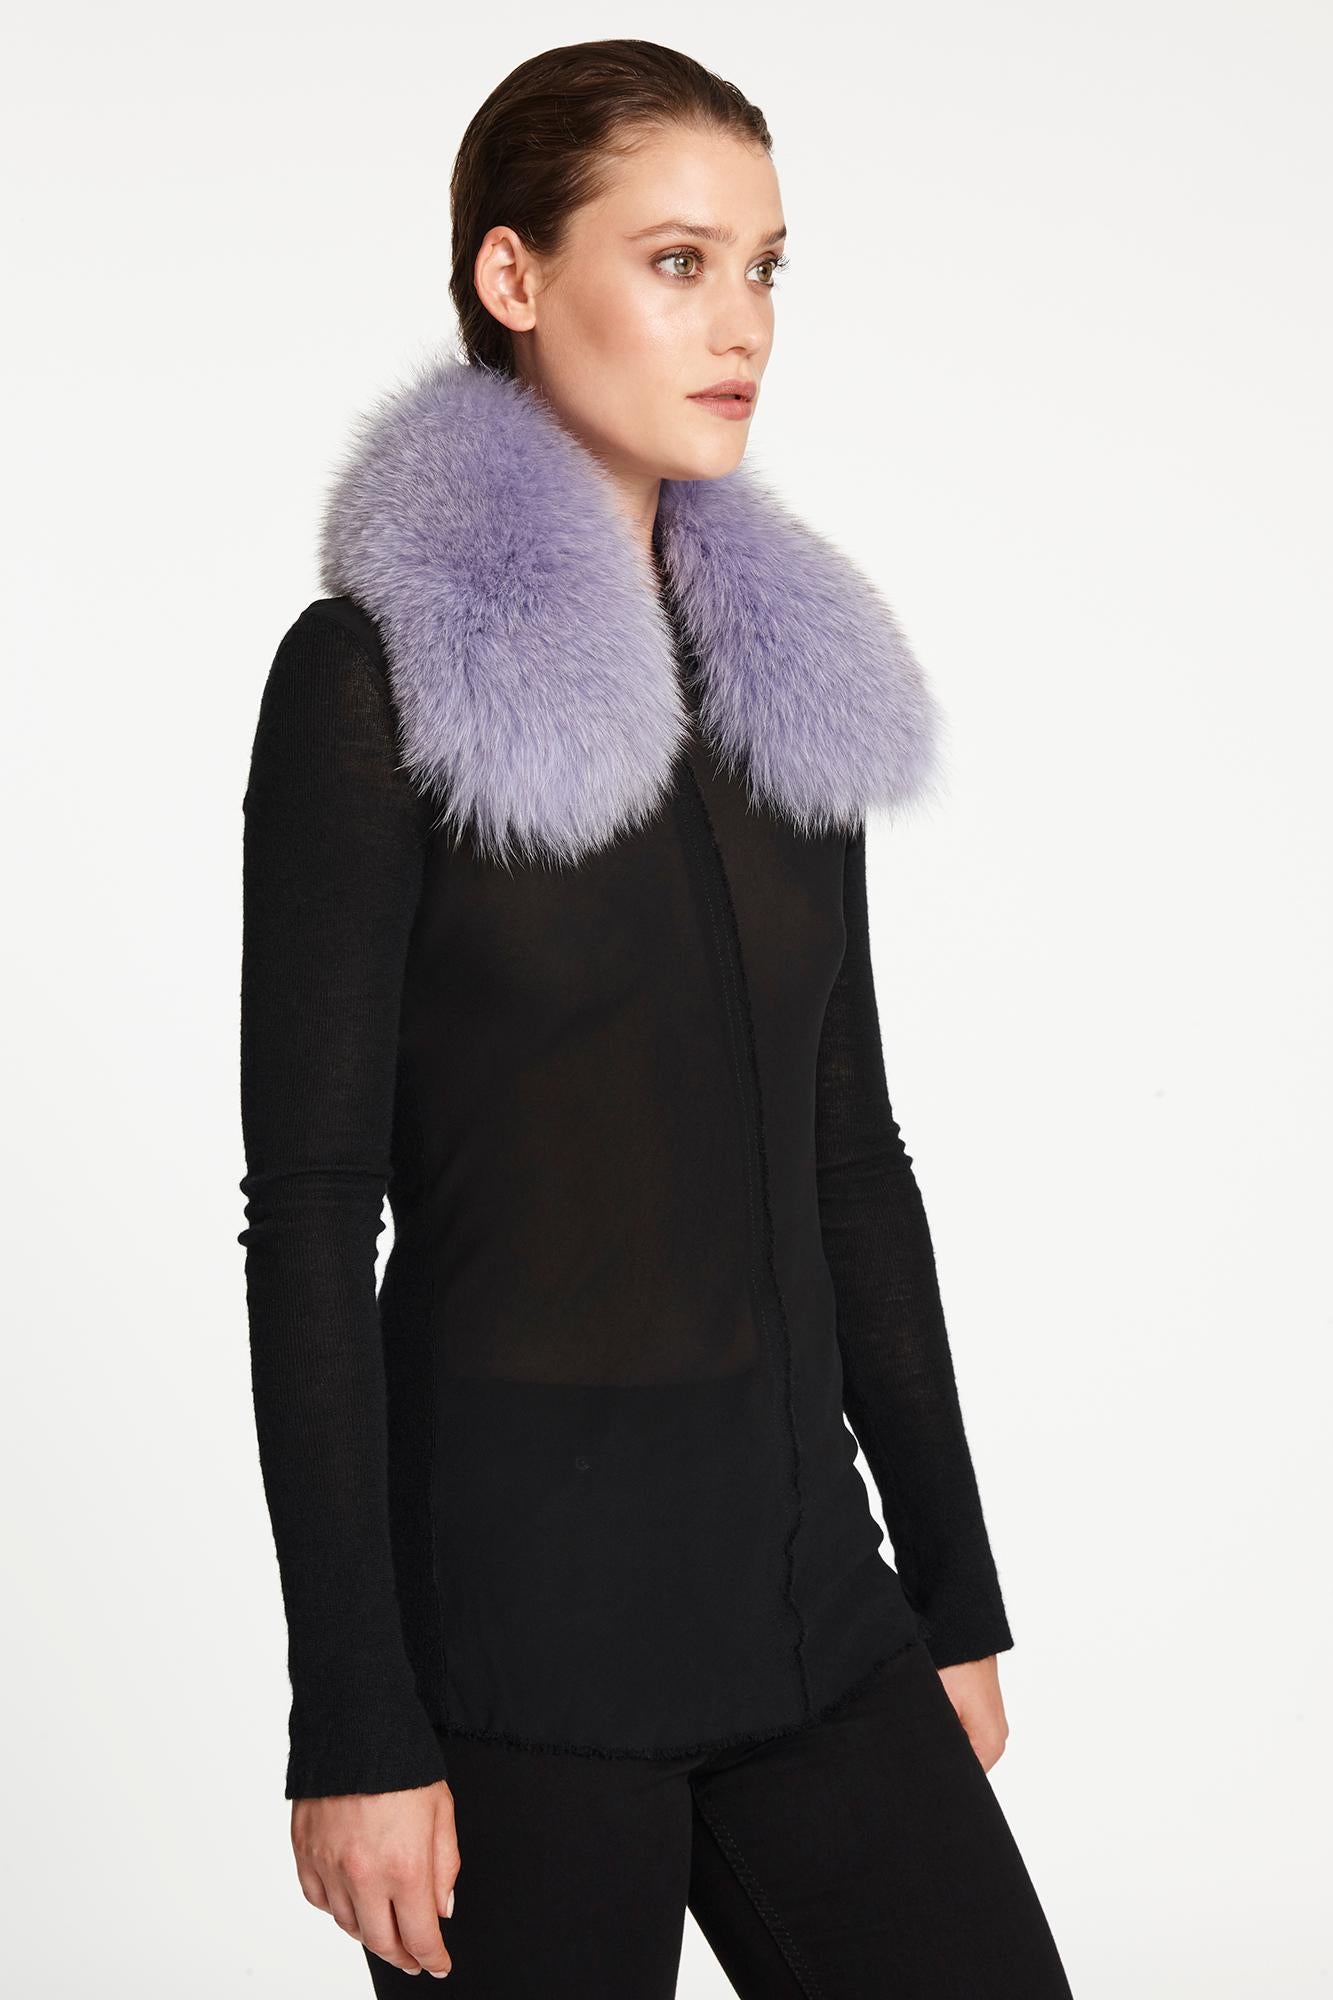 Verheyen London Peter Pan Collar in Lilac Fox Fur - Brand New  1